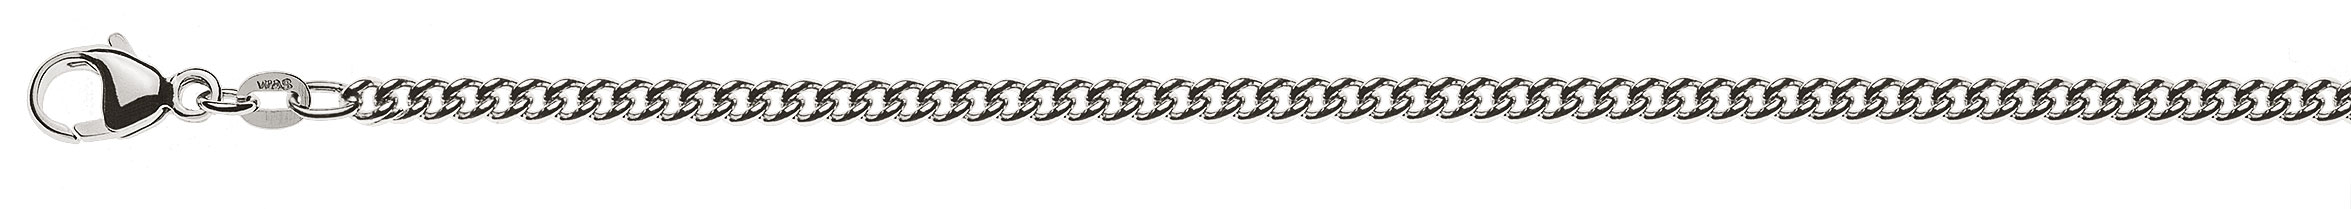 AURONOS Prestige Necklace white gold 18K round curb chain 55cm 2.8mm